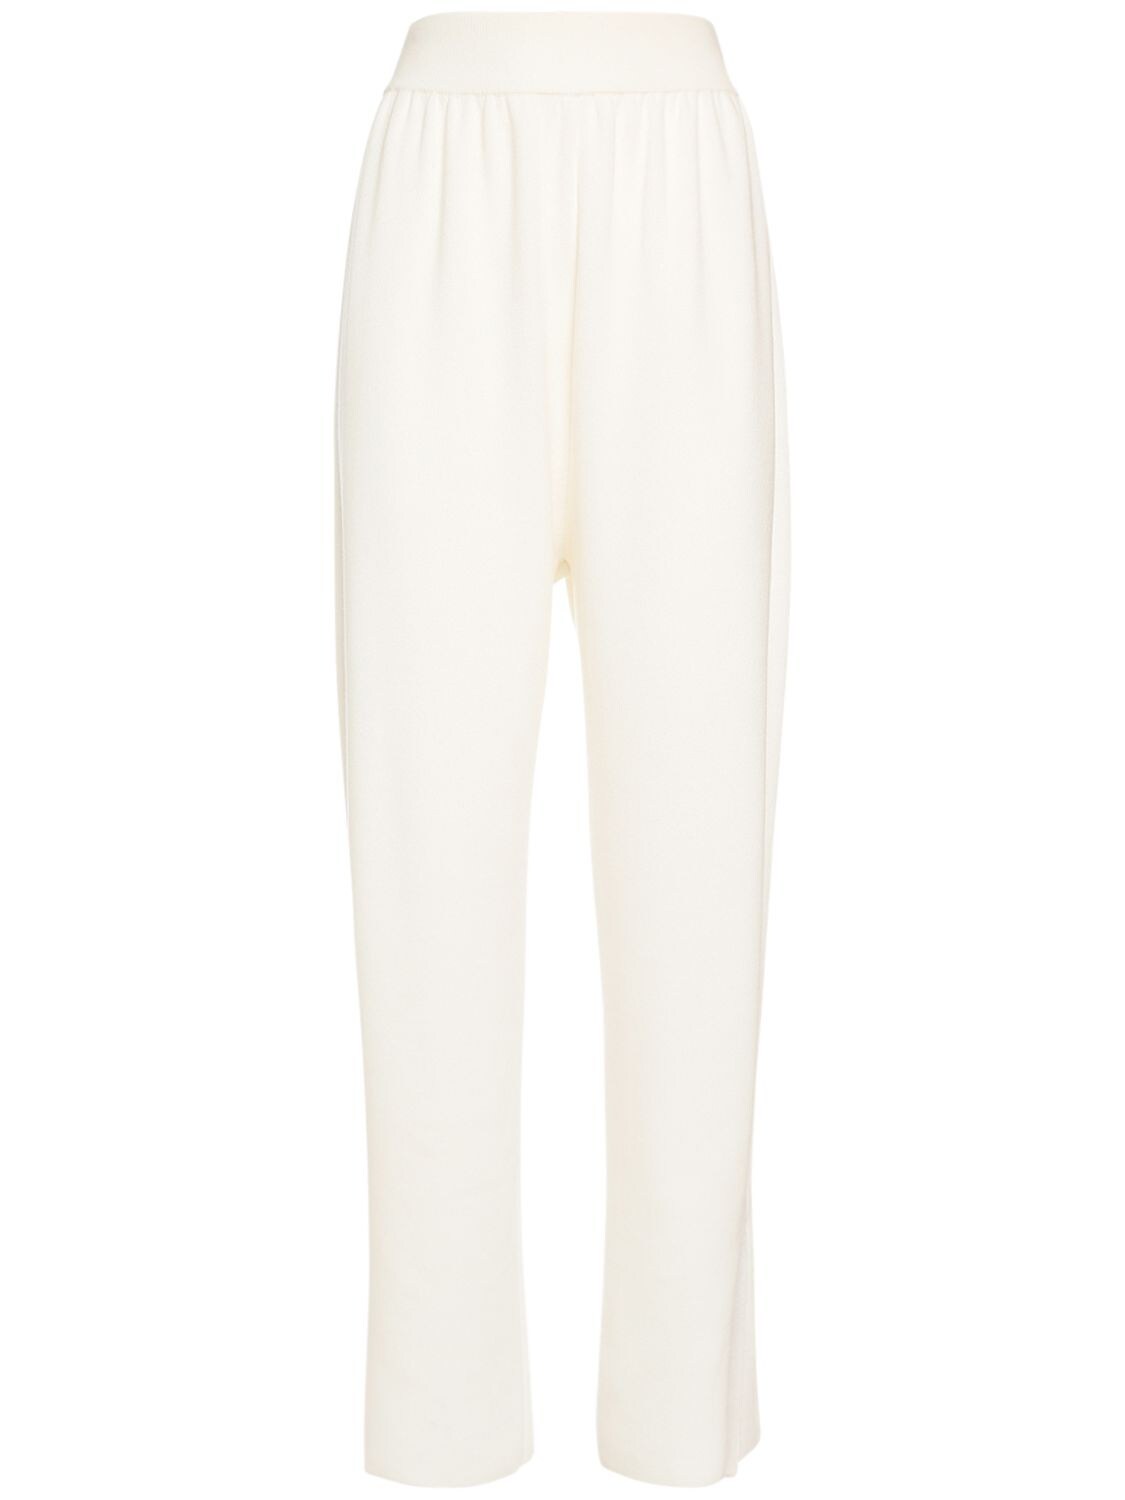 Agnona Cotton Blend Knit Pants In White